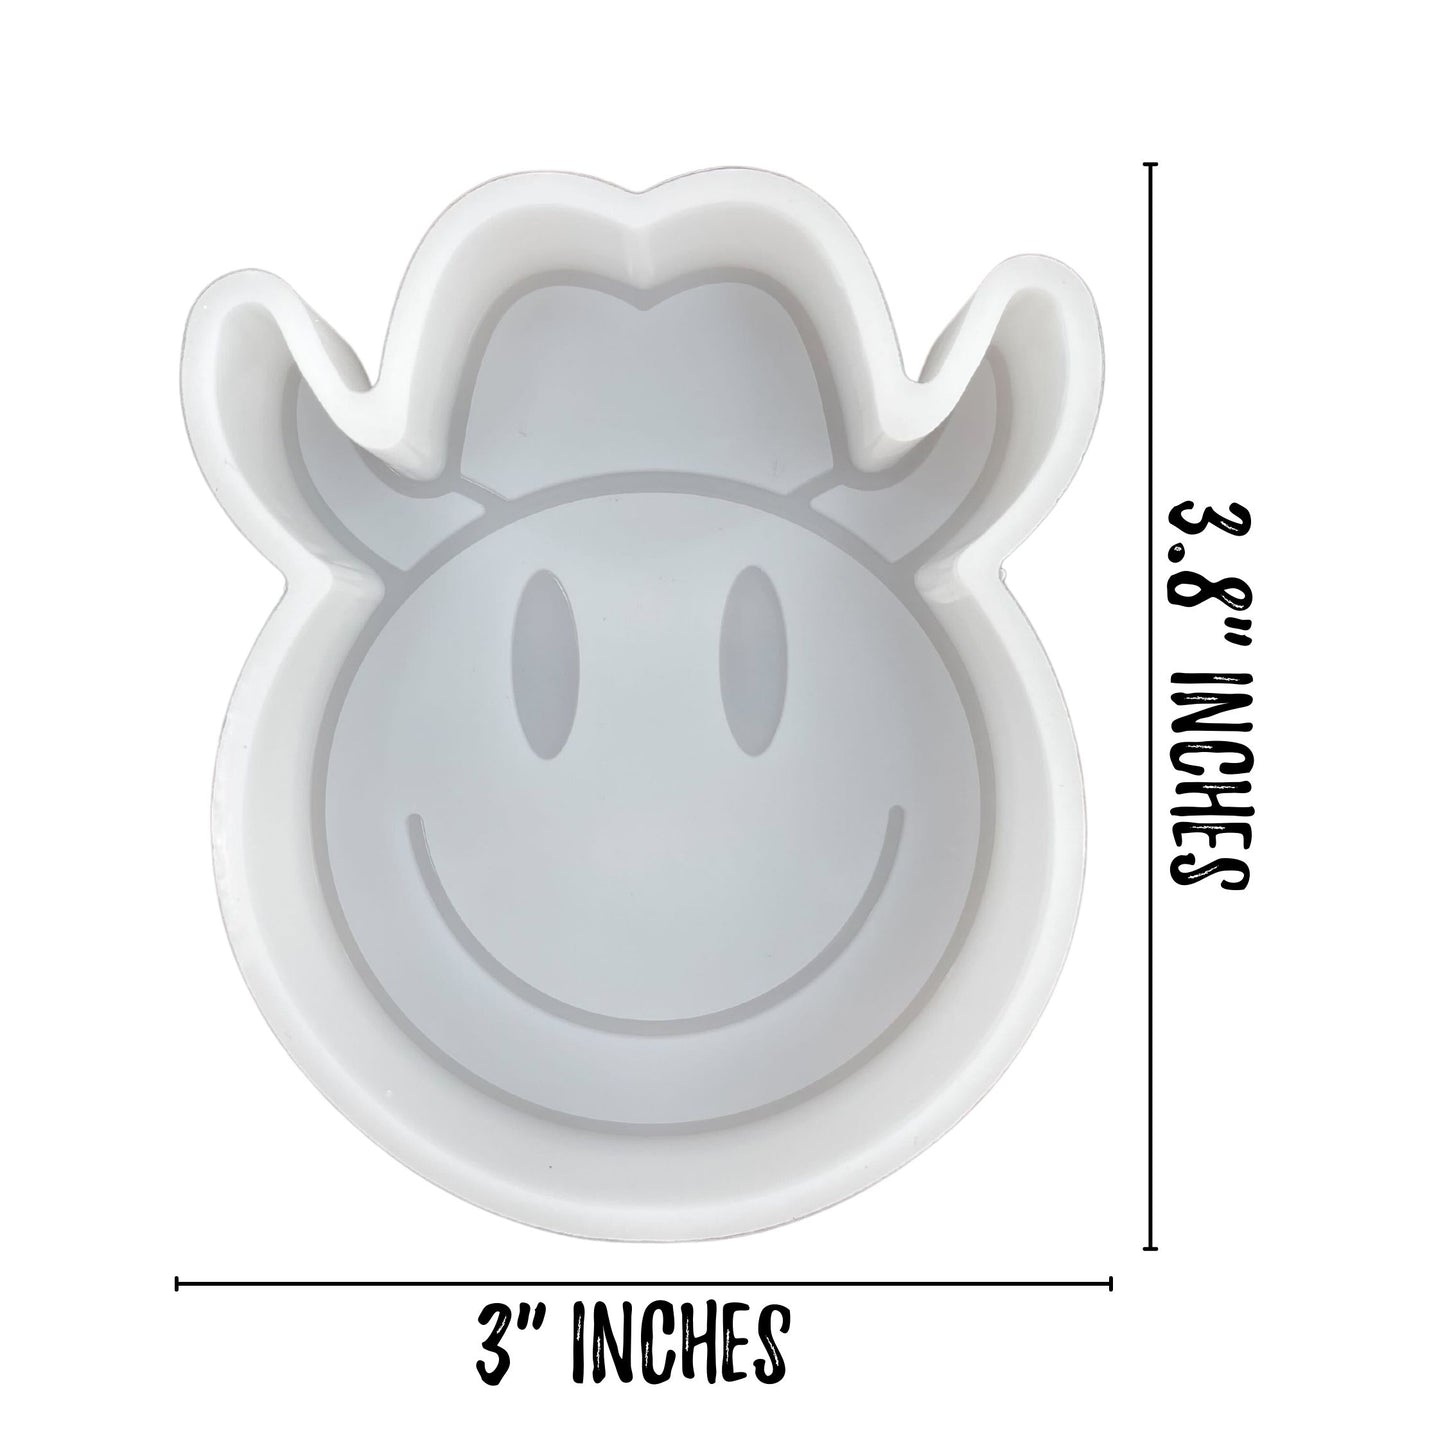 Cowboy Hat Smiley Face  Silicone Mold